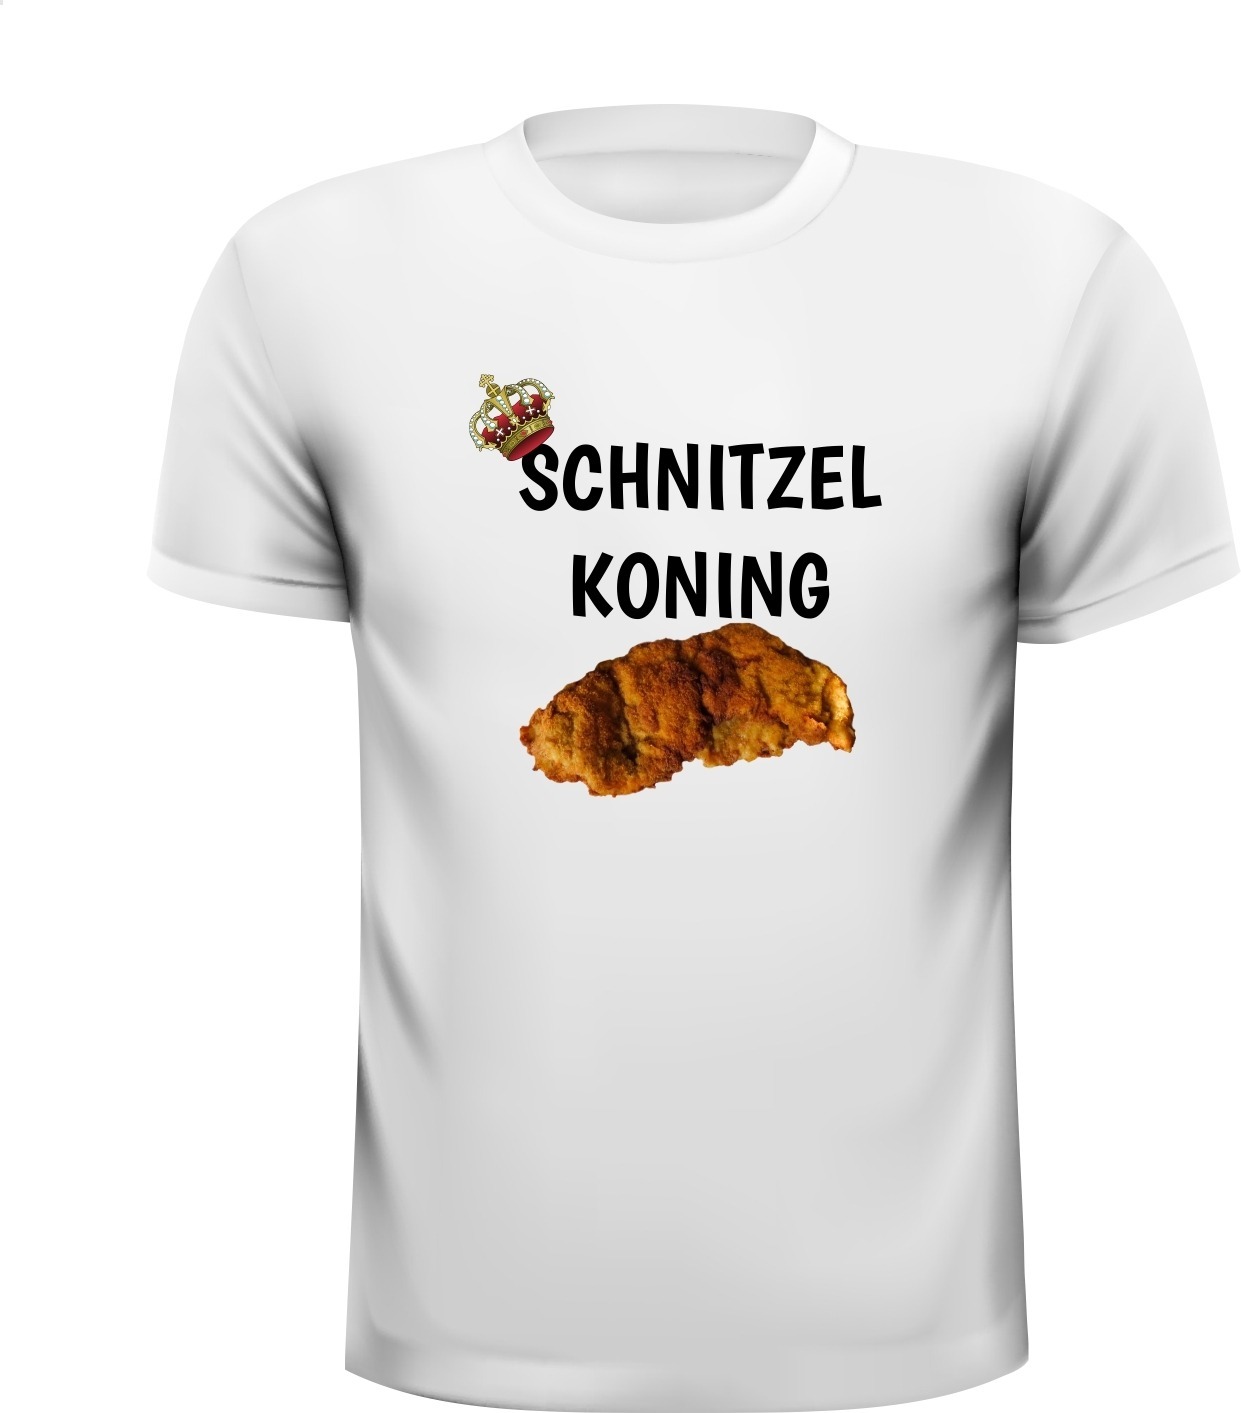 Schnitzel koning t-shirt